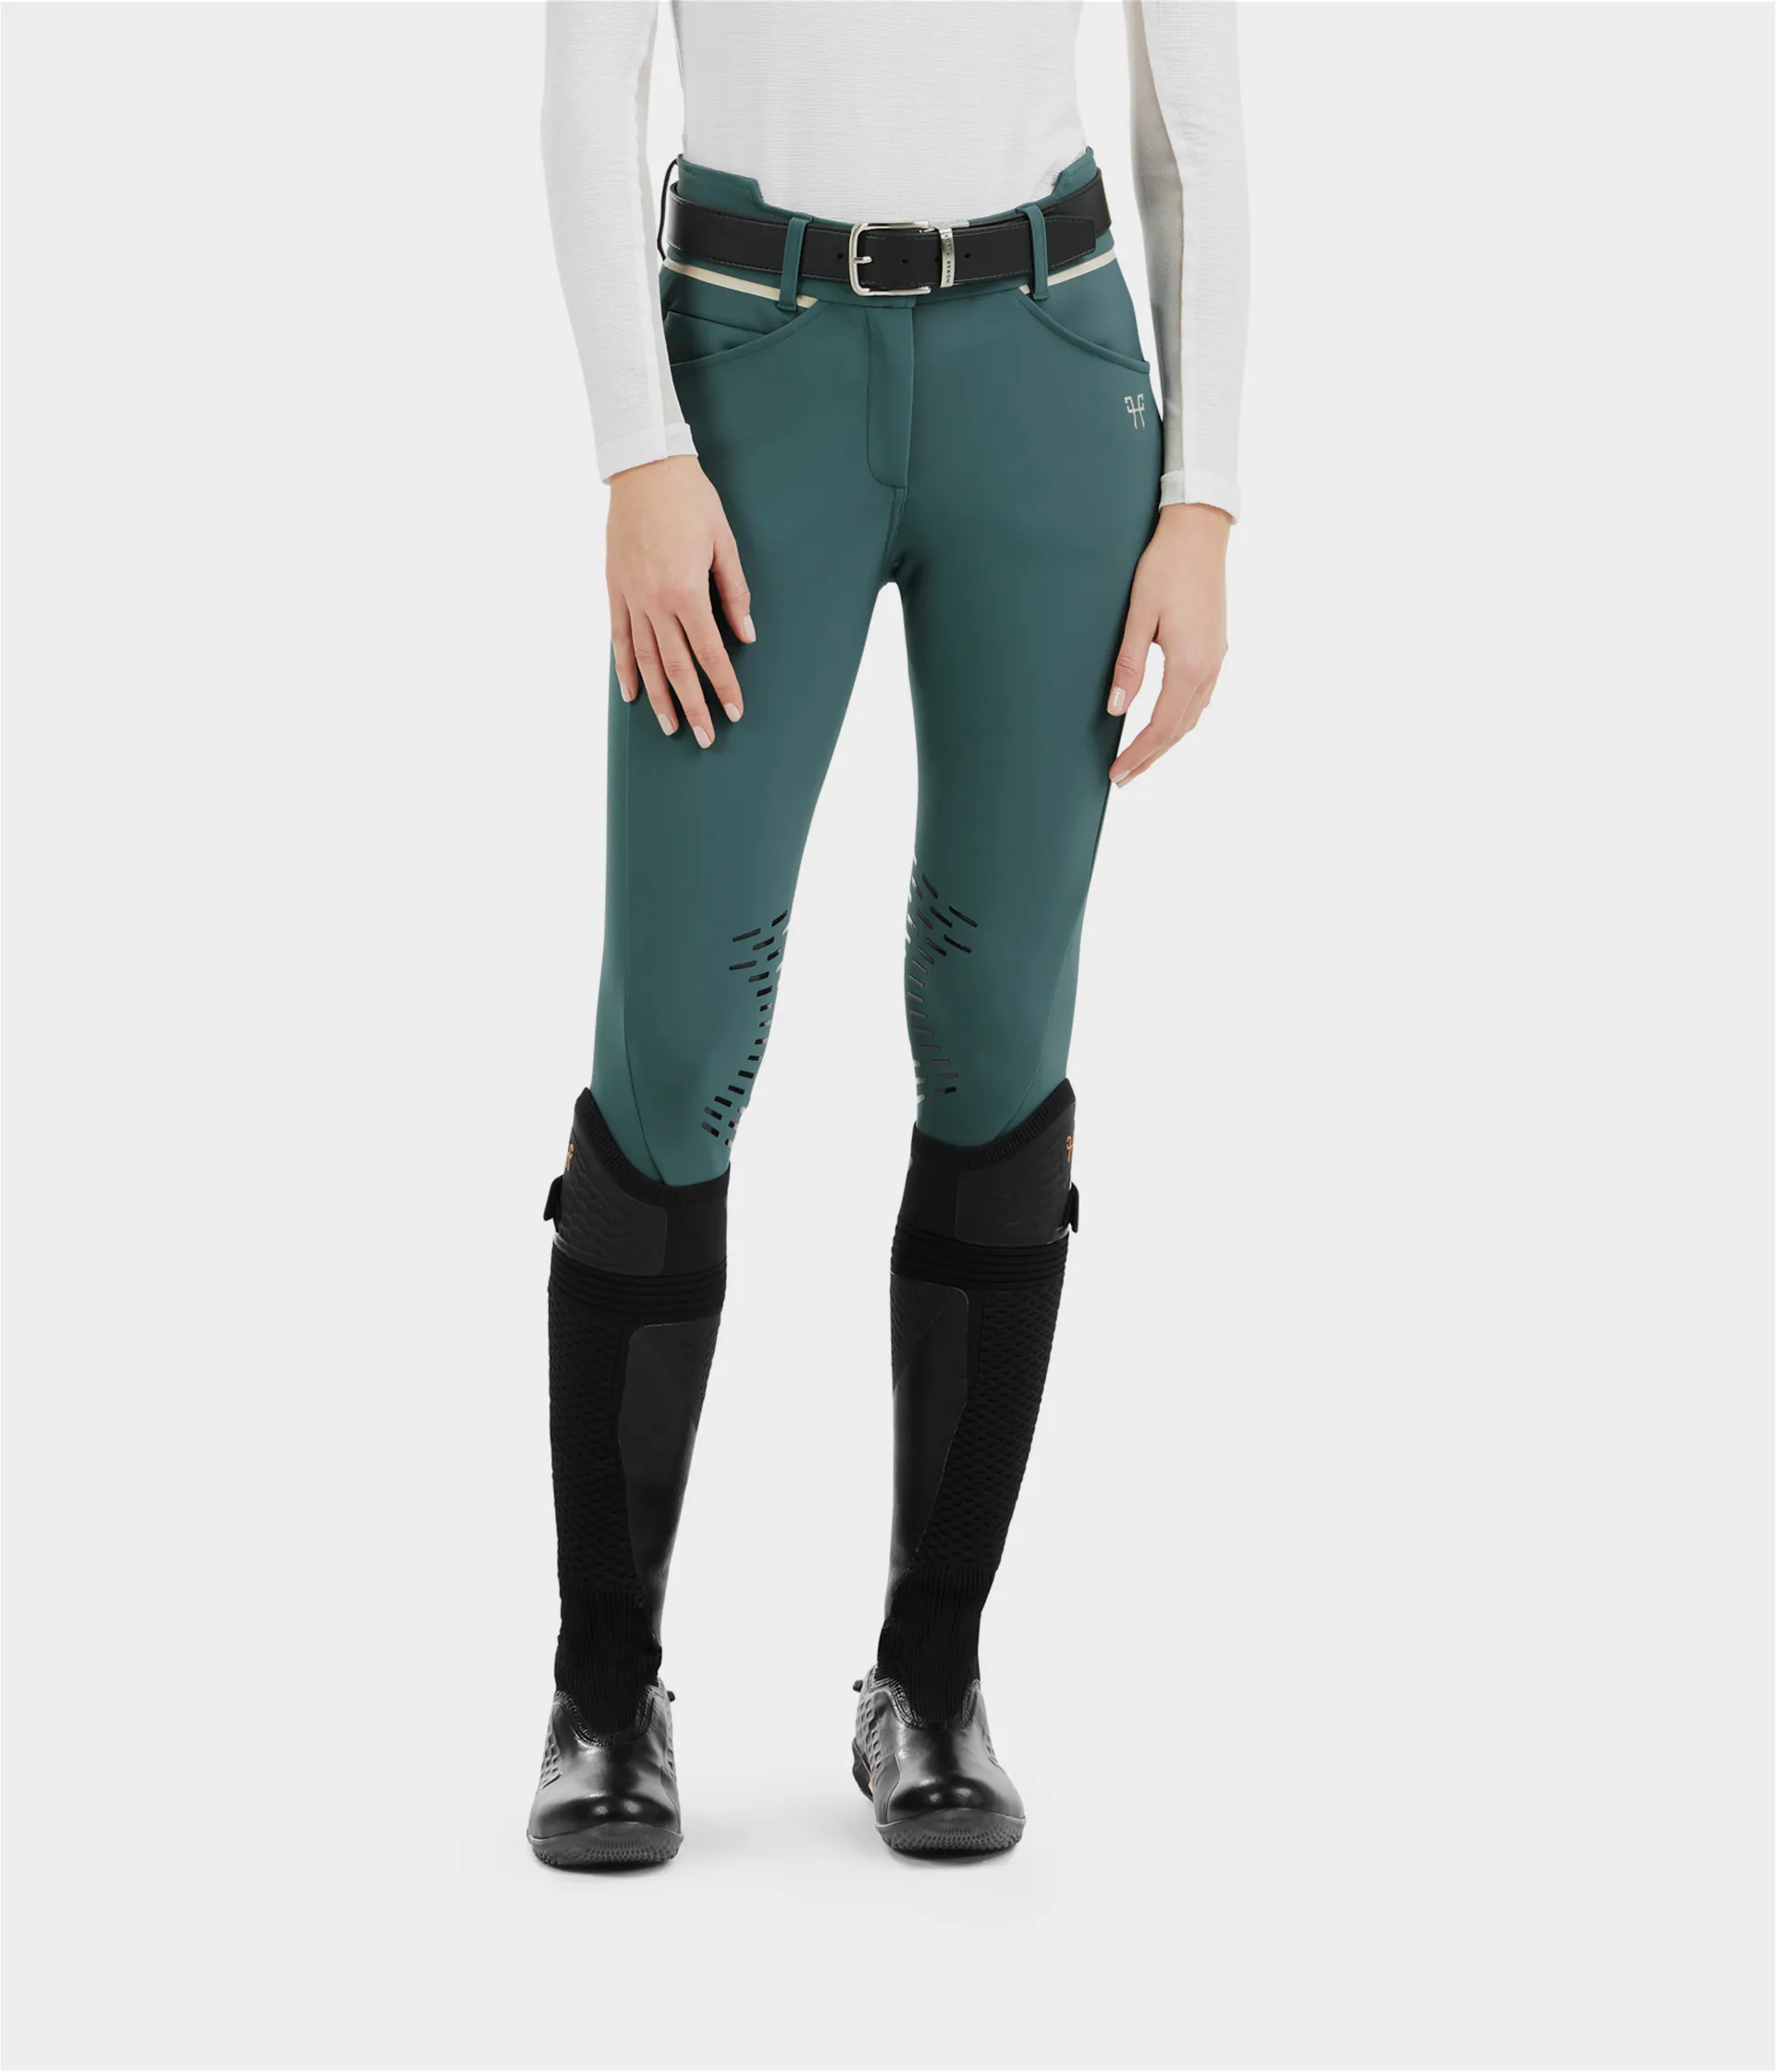 pantalon équitation femme horse pilot x-design couleur balsam green